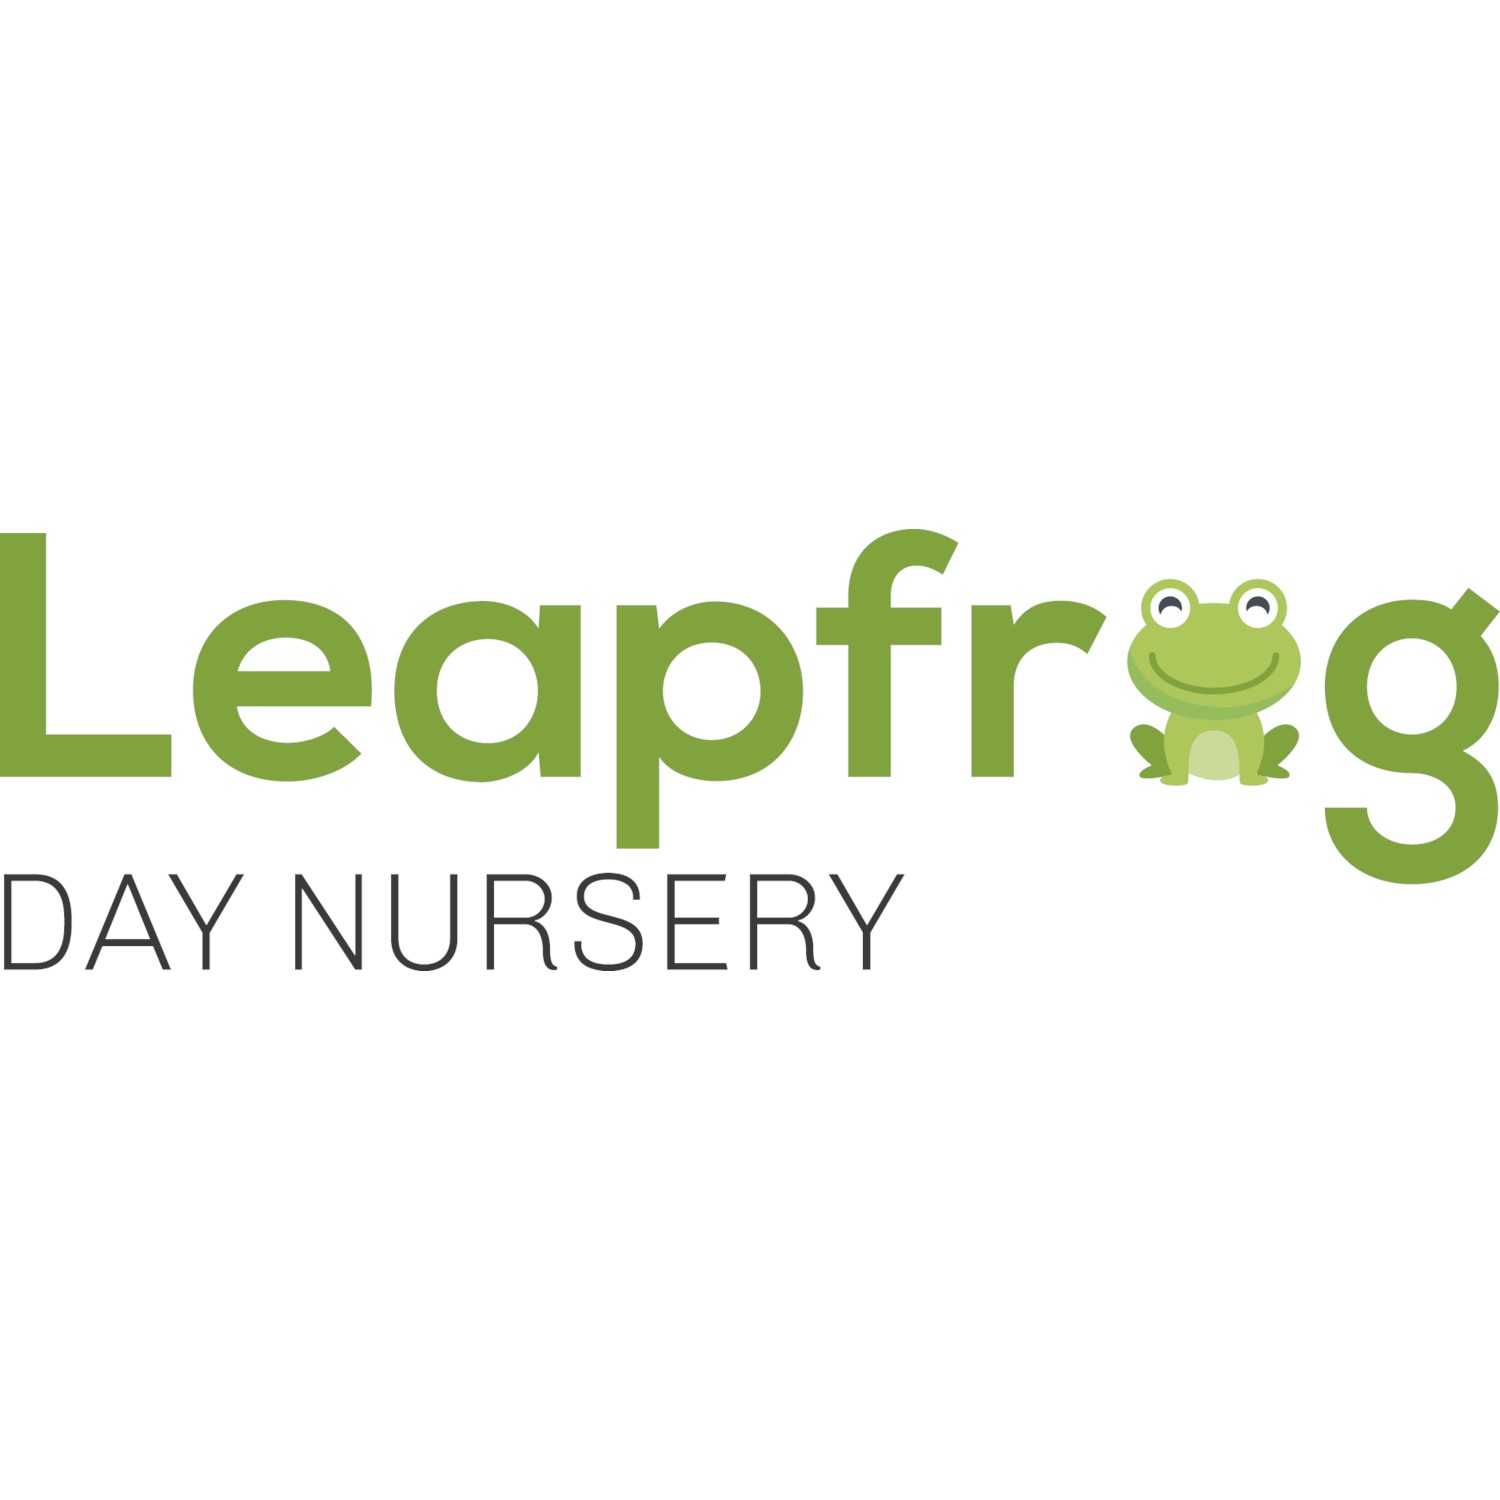 Leapfrog Day Nursery